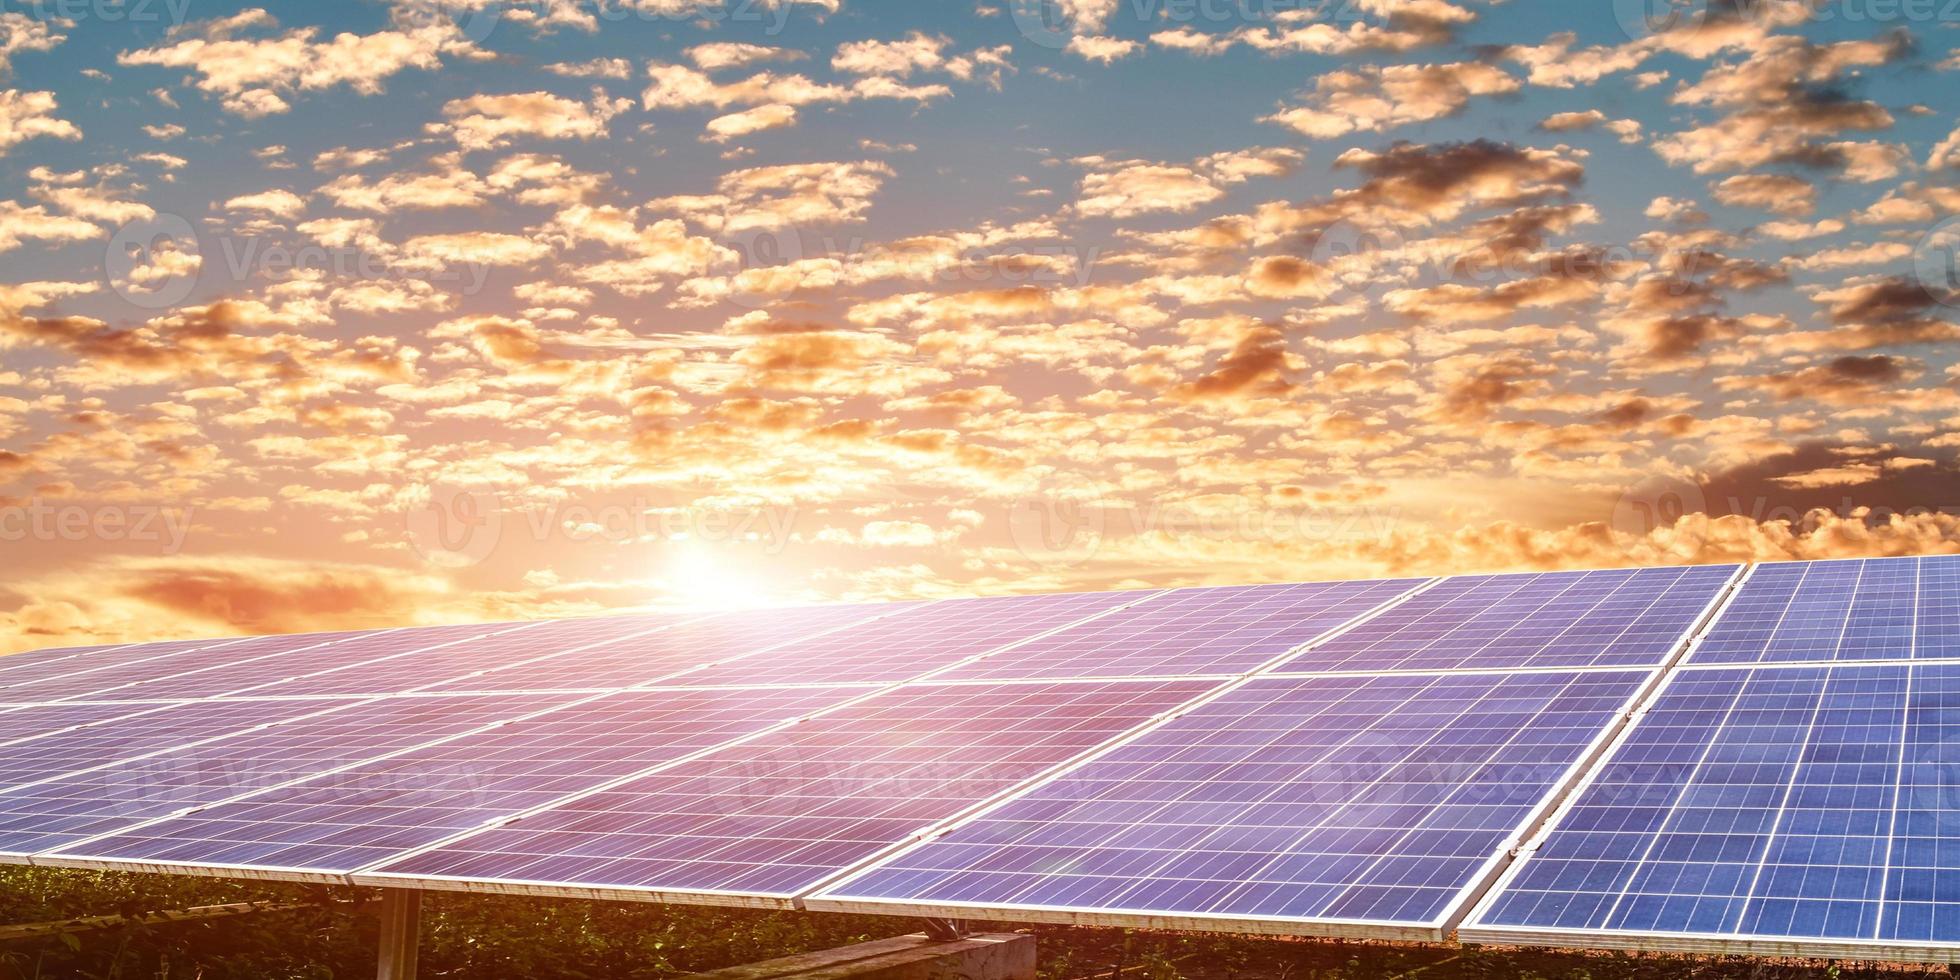 zonnepaneel tegen zonsondergang hemelachtergrond, fotovoltaïsche, alternatieve elektriciteitsbron, modules hernieuwbare energie. concept van duurzame energiebronnen foto